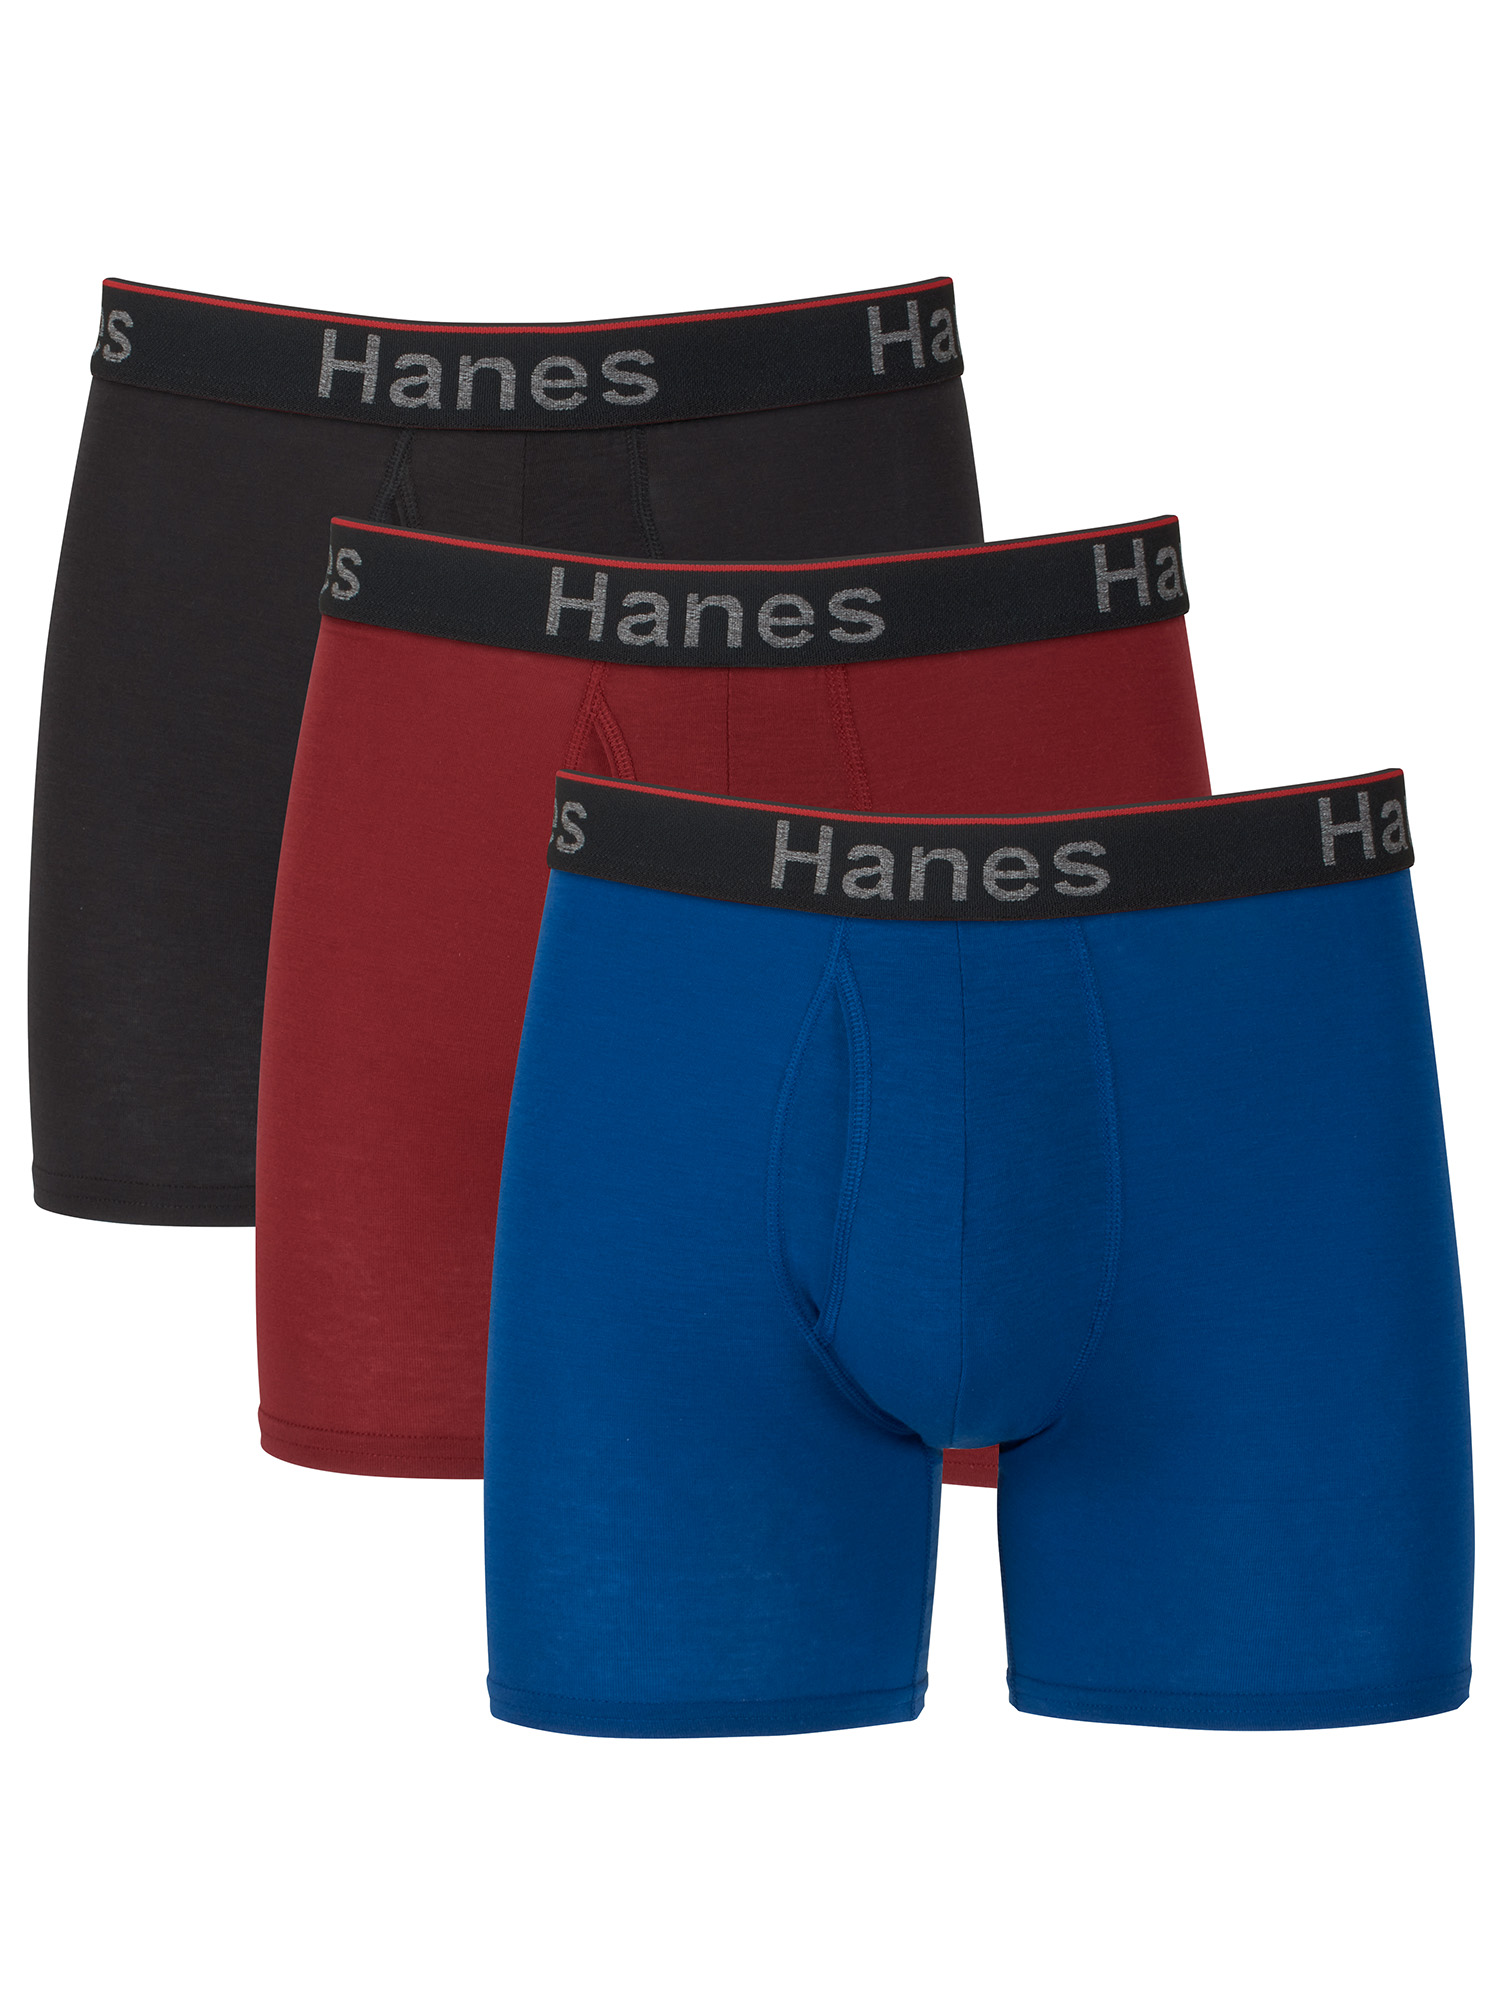 Hanes Men's Value Pack White Briefs, 6 Pack - Walmart.com